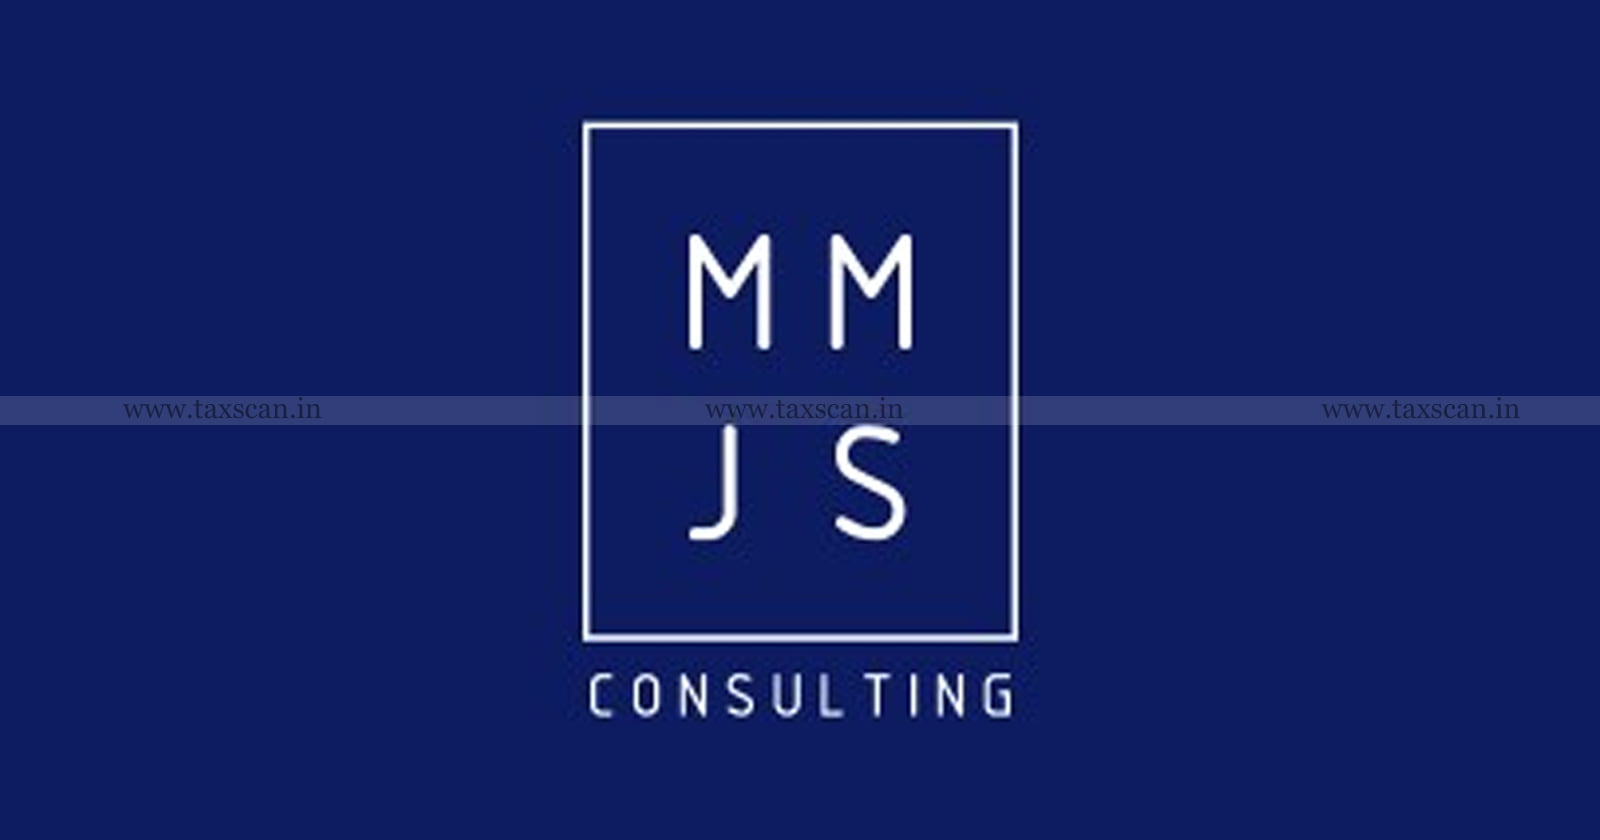 CA Vacancy in MMJS Consulting - CA Vacancy - CA - MMJS Consulting - CA Jobs - Job Scan - MMJS Consulting vacancies - taxscan